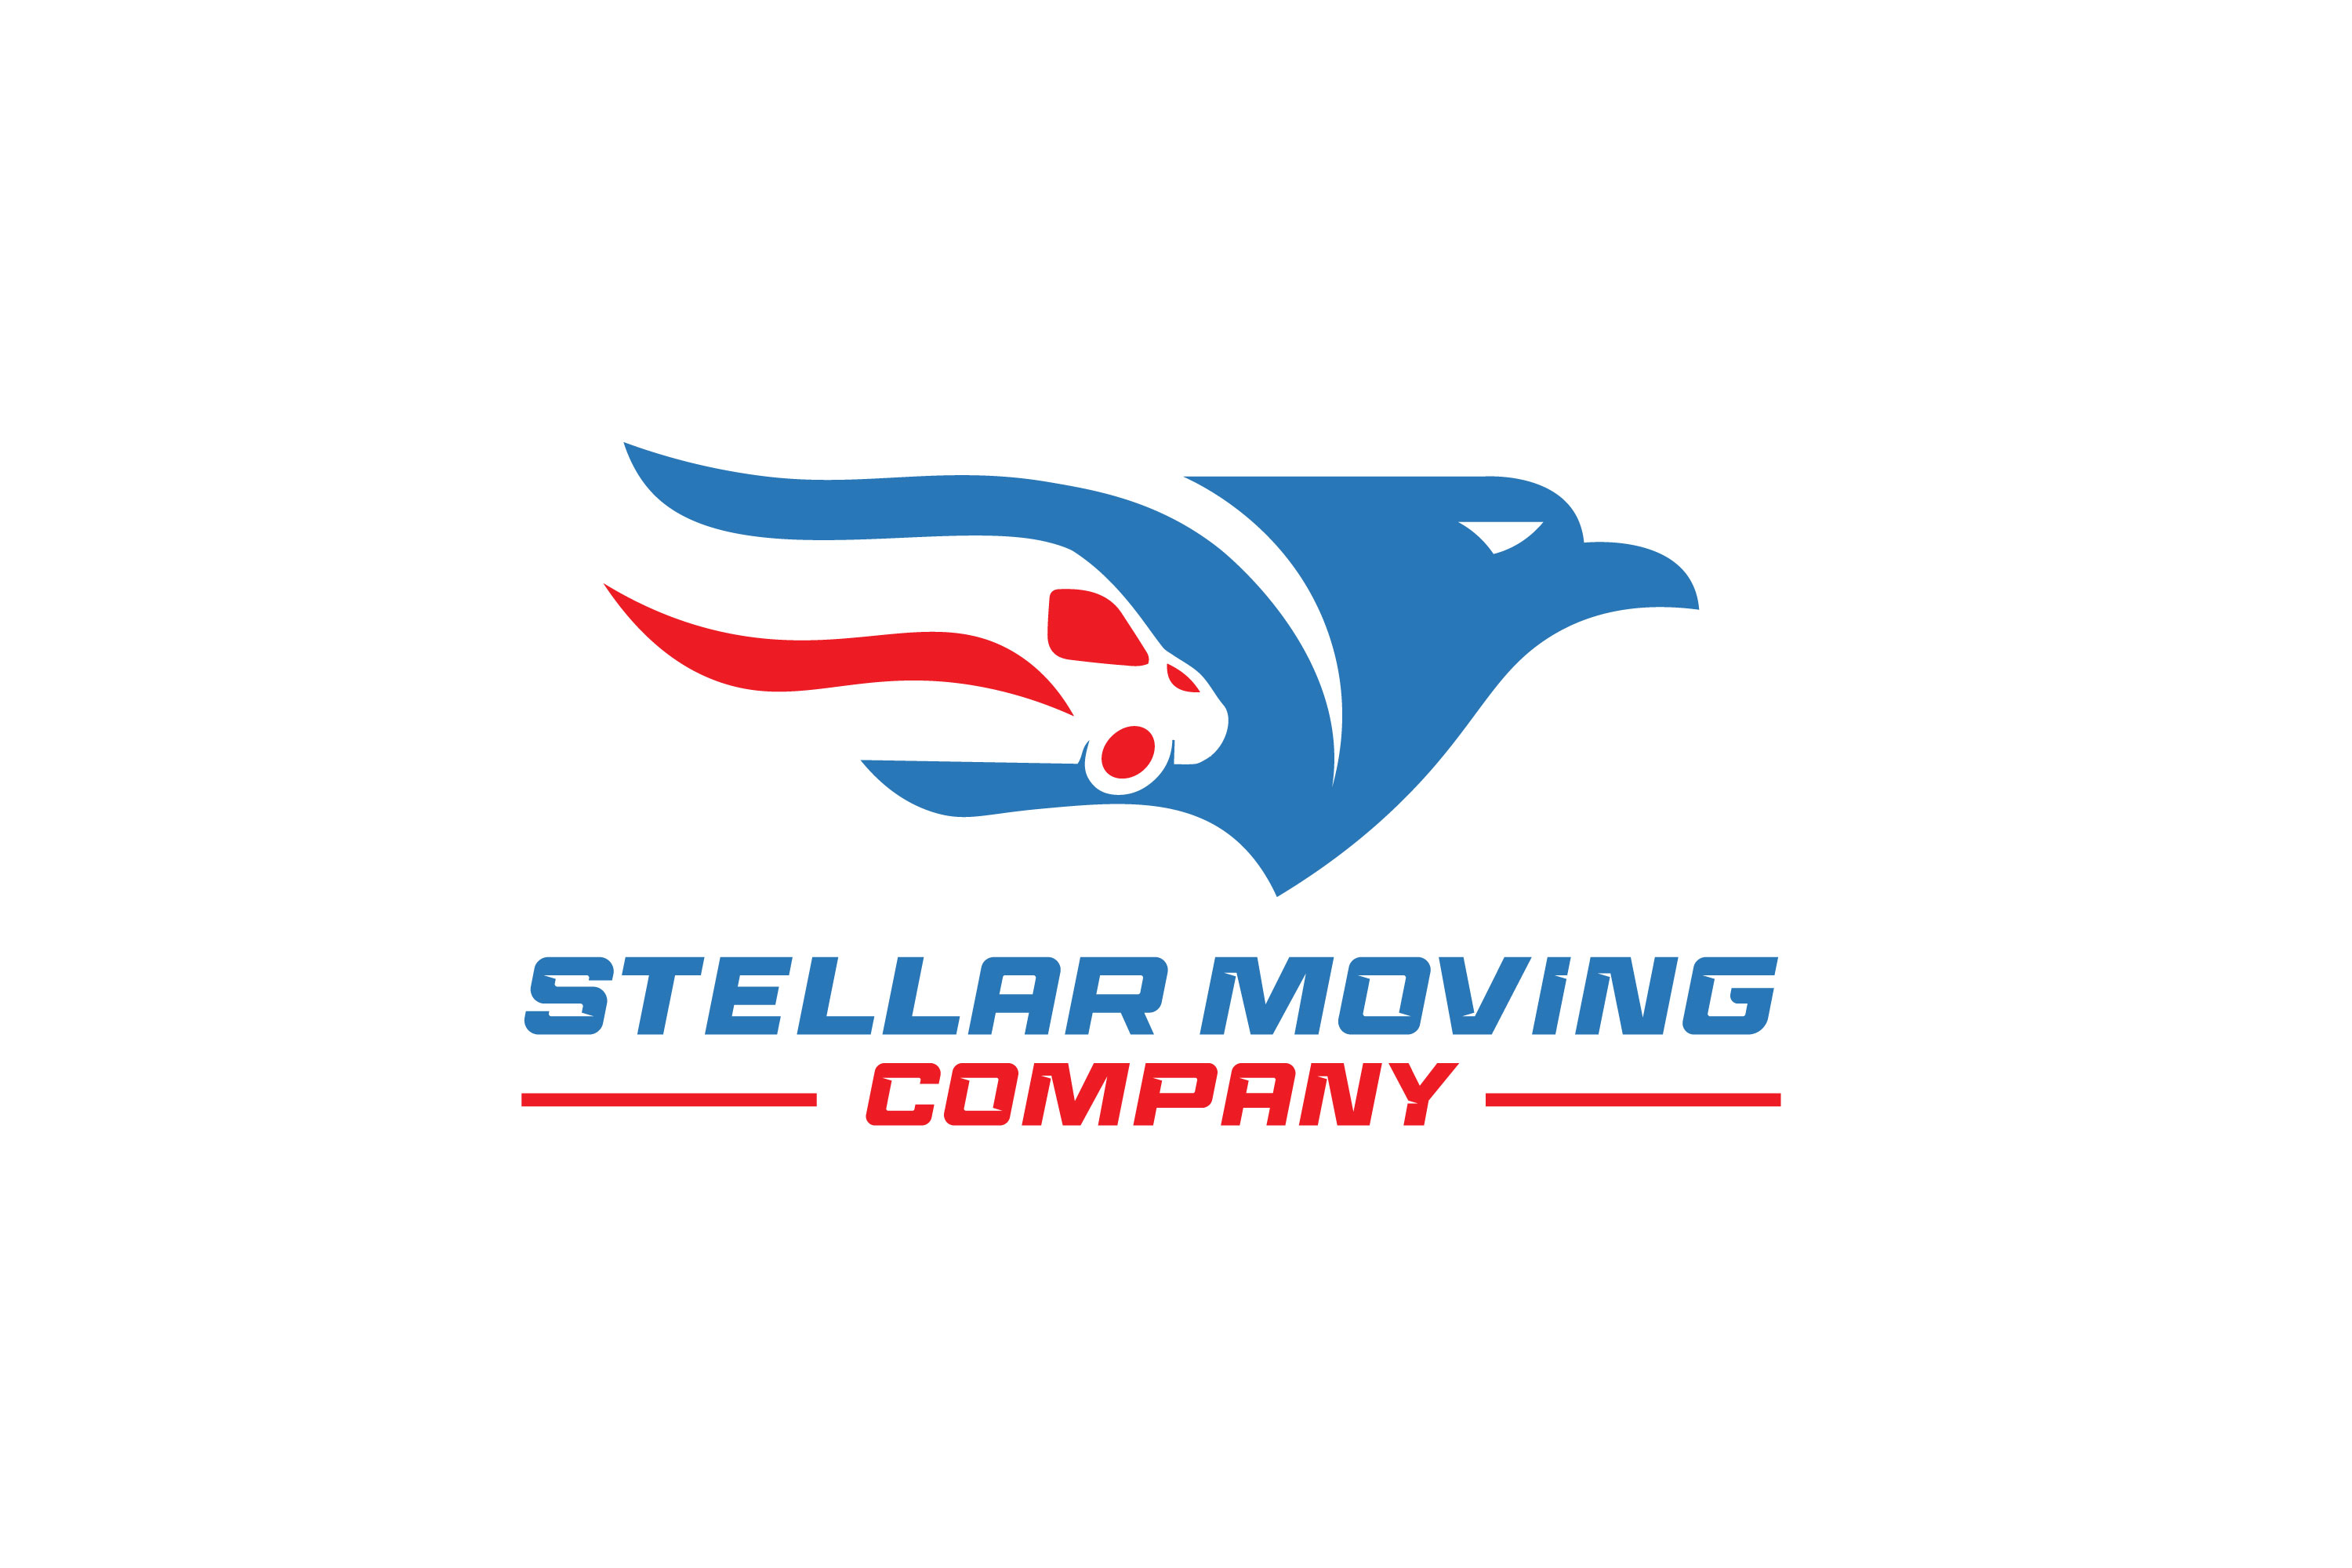 Stellar Moving Company